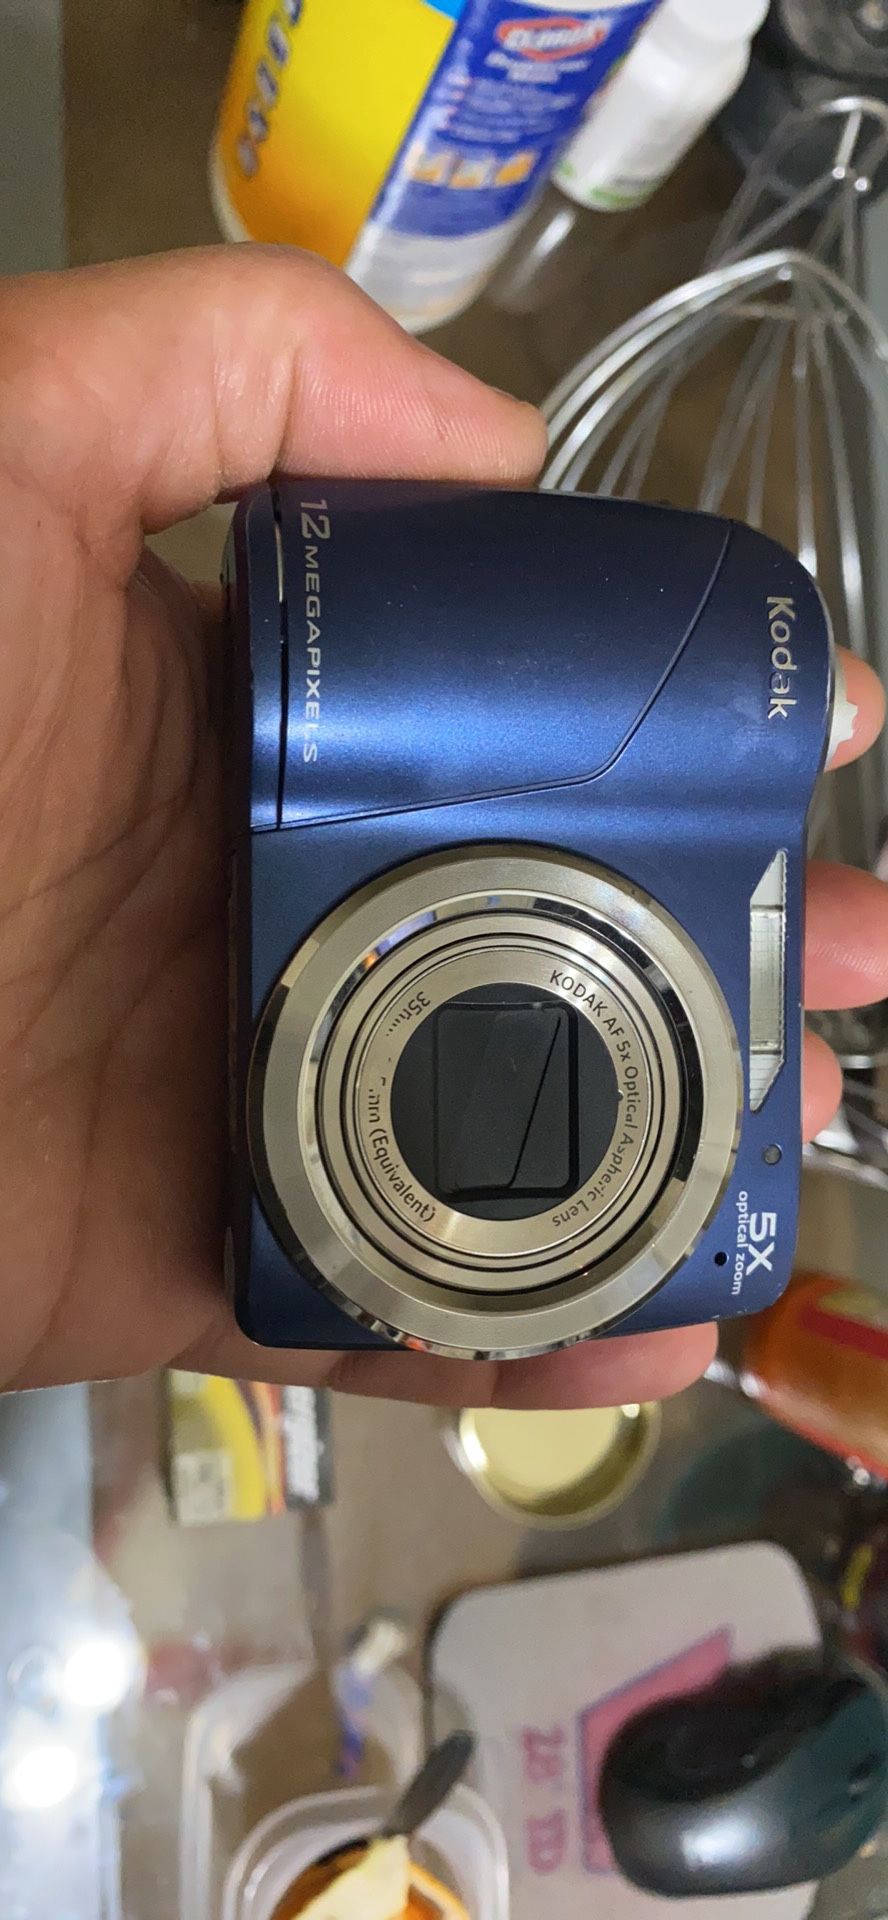 Kodak 12 MP digital camera with SD card